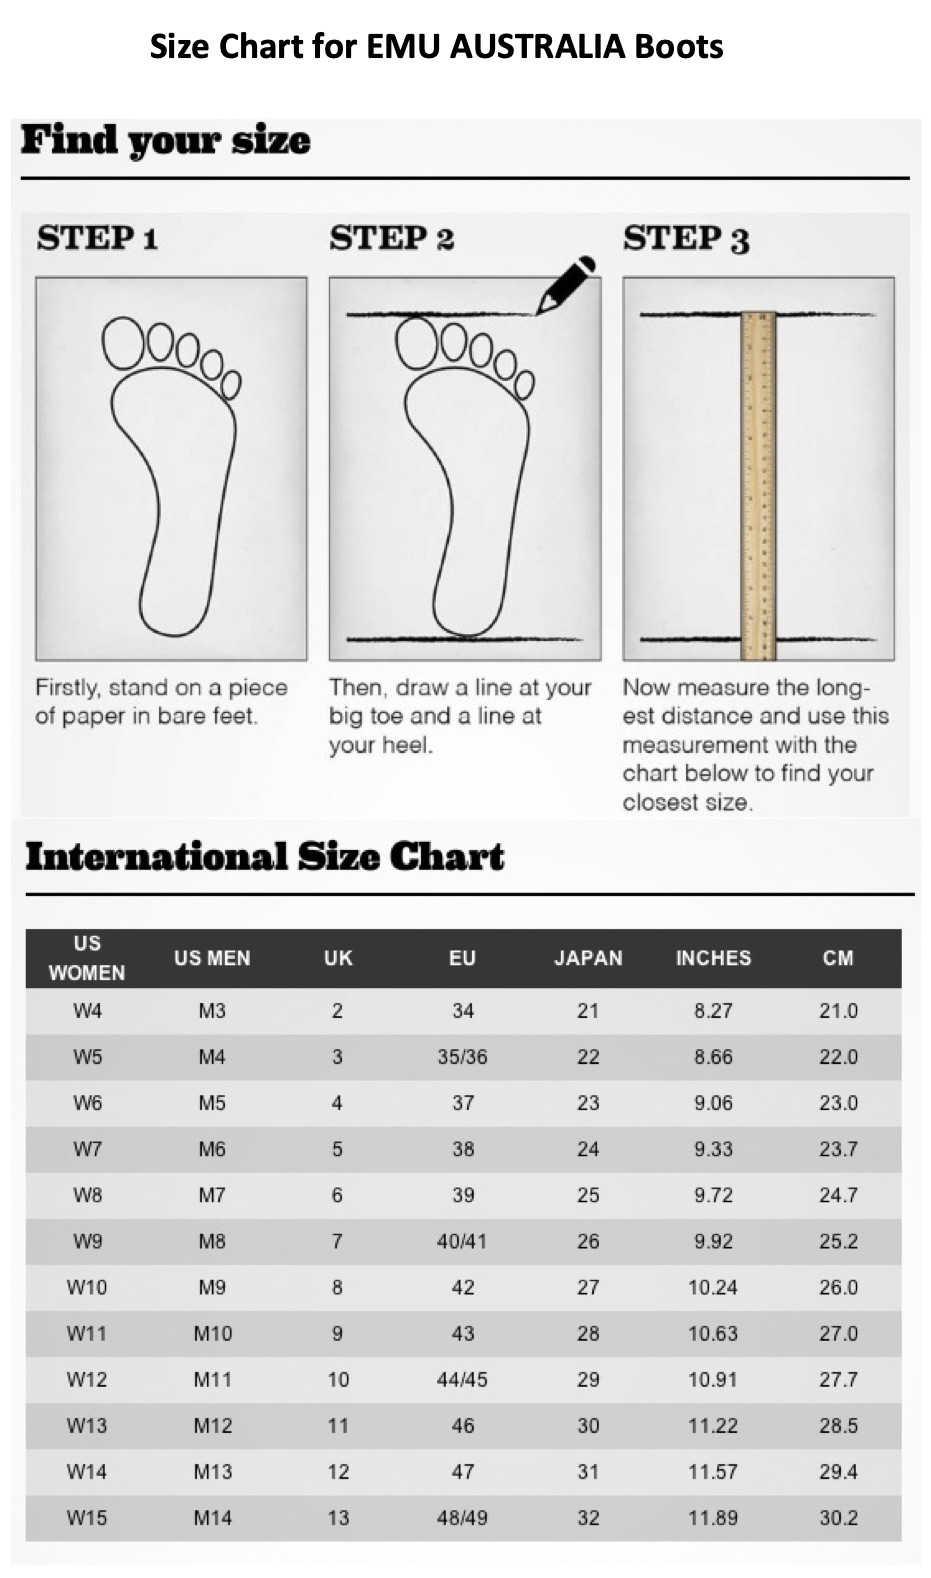 size-chart-for-emu-australia-boots.jpg